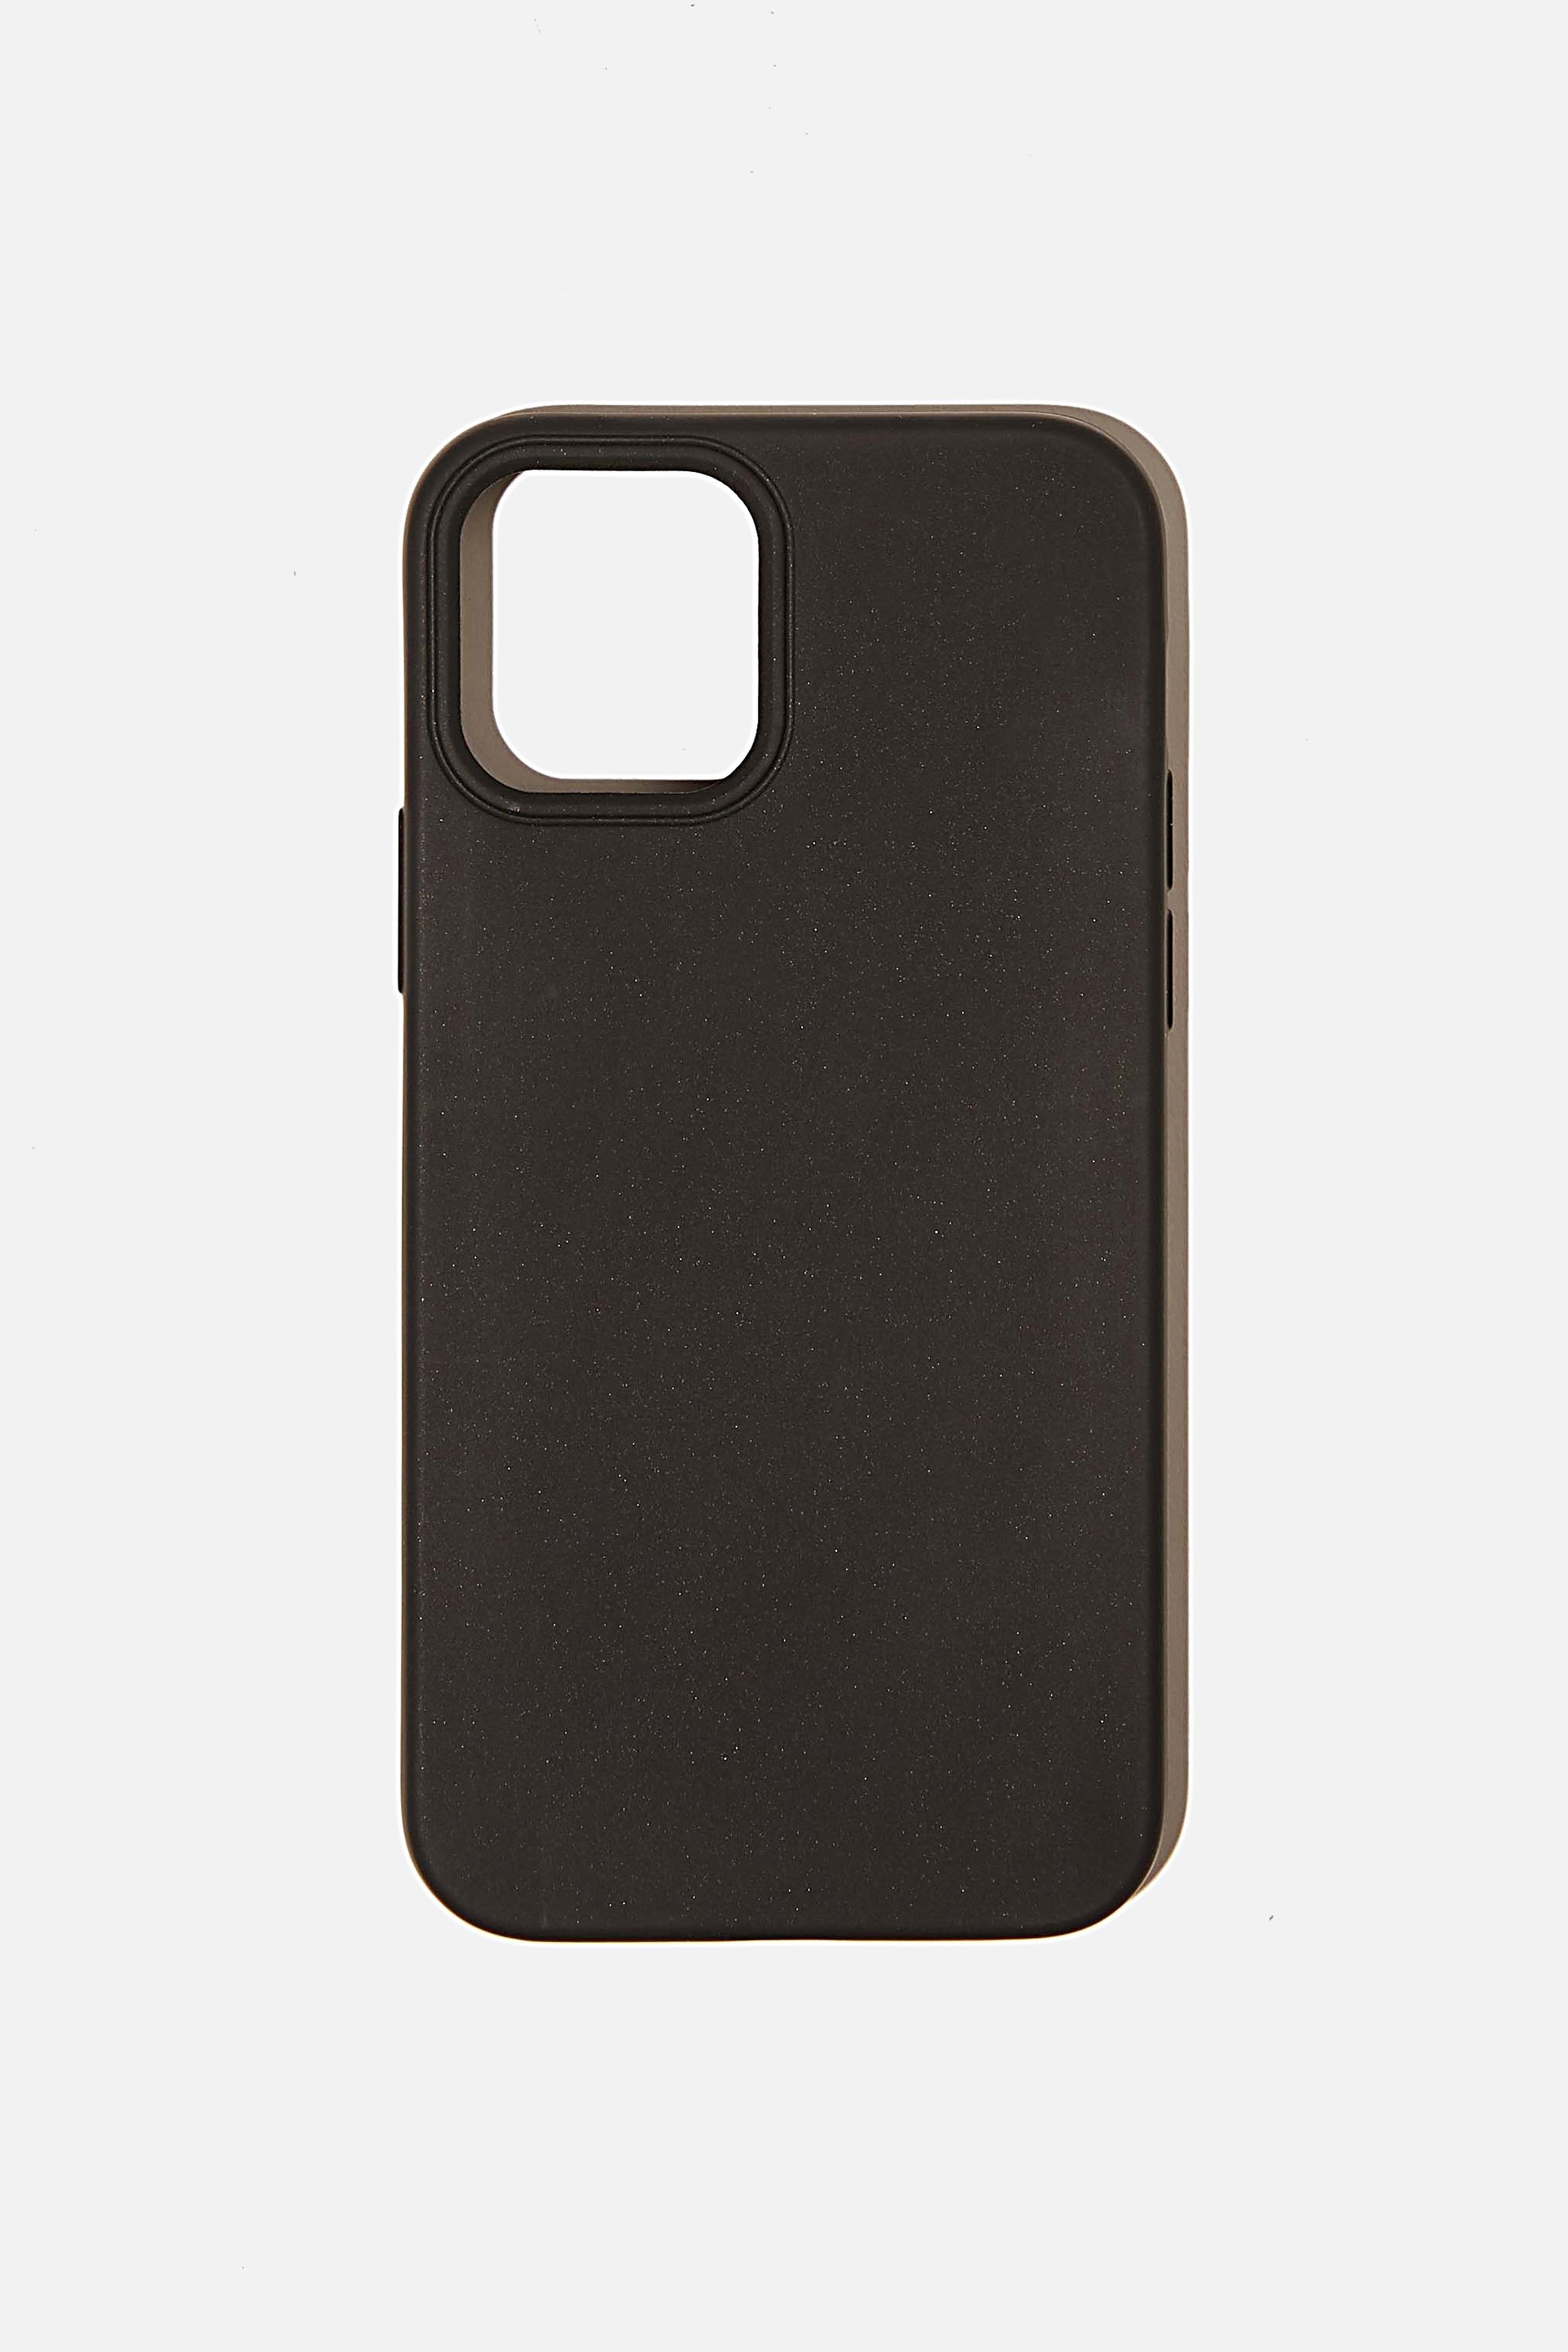 Typo - Recycled Phone Case Iphone 12, 12 Pro - Black